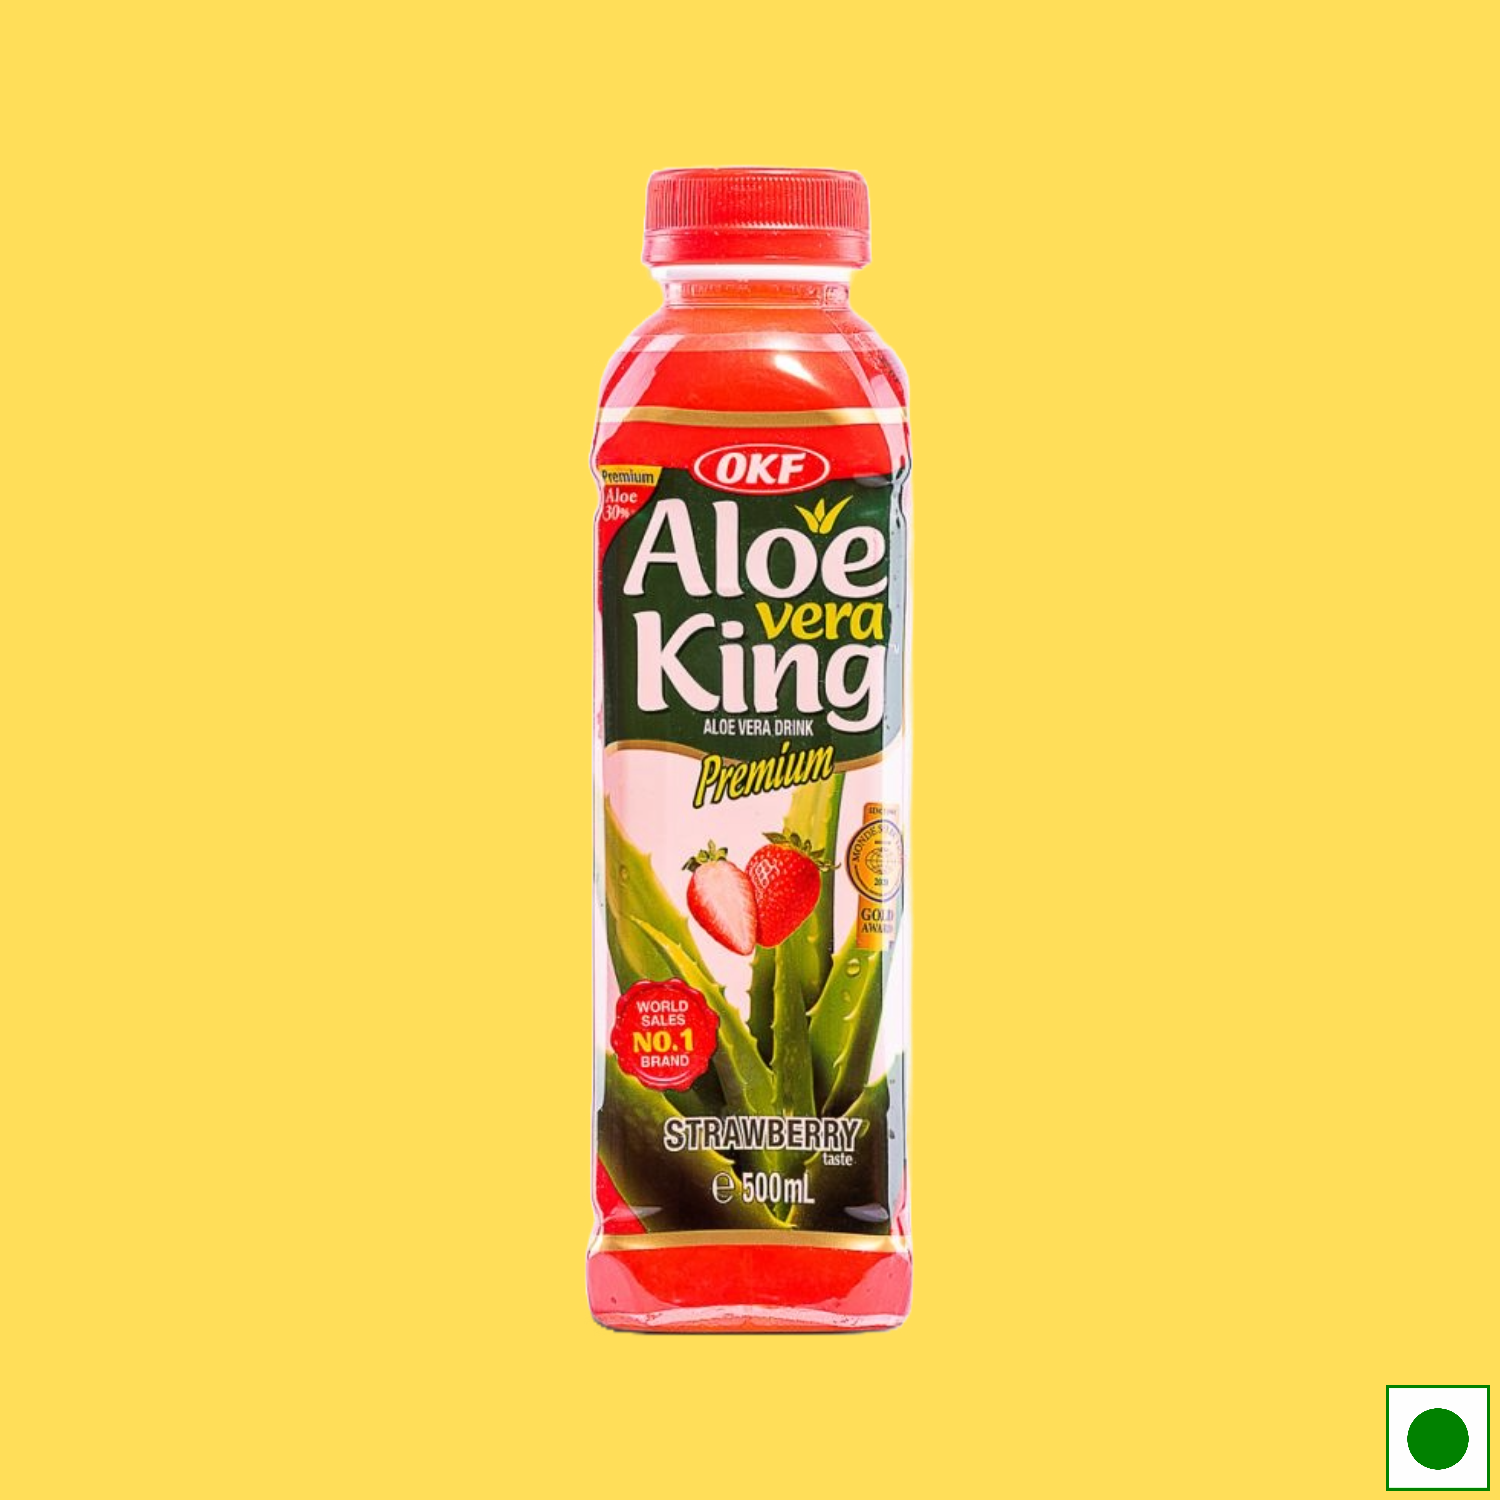 OKF Aloe Vera King Premium Strawberry, 500ml (Imported)